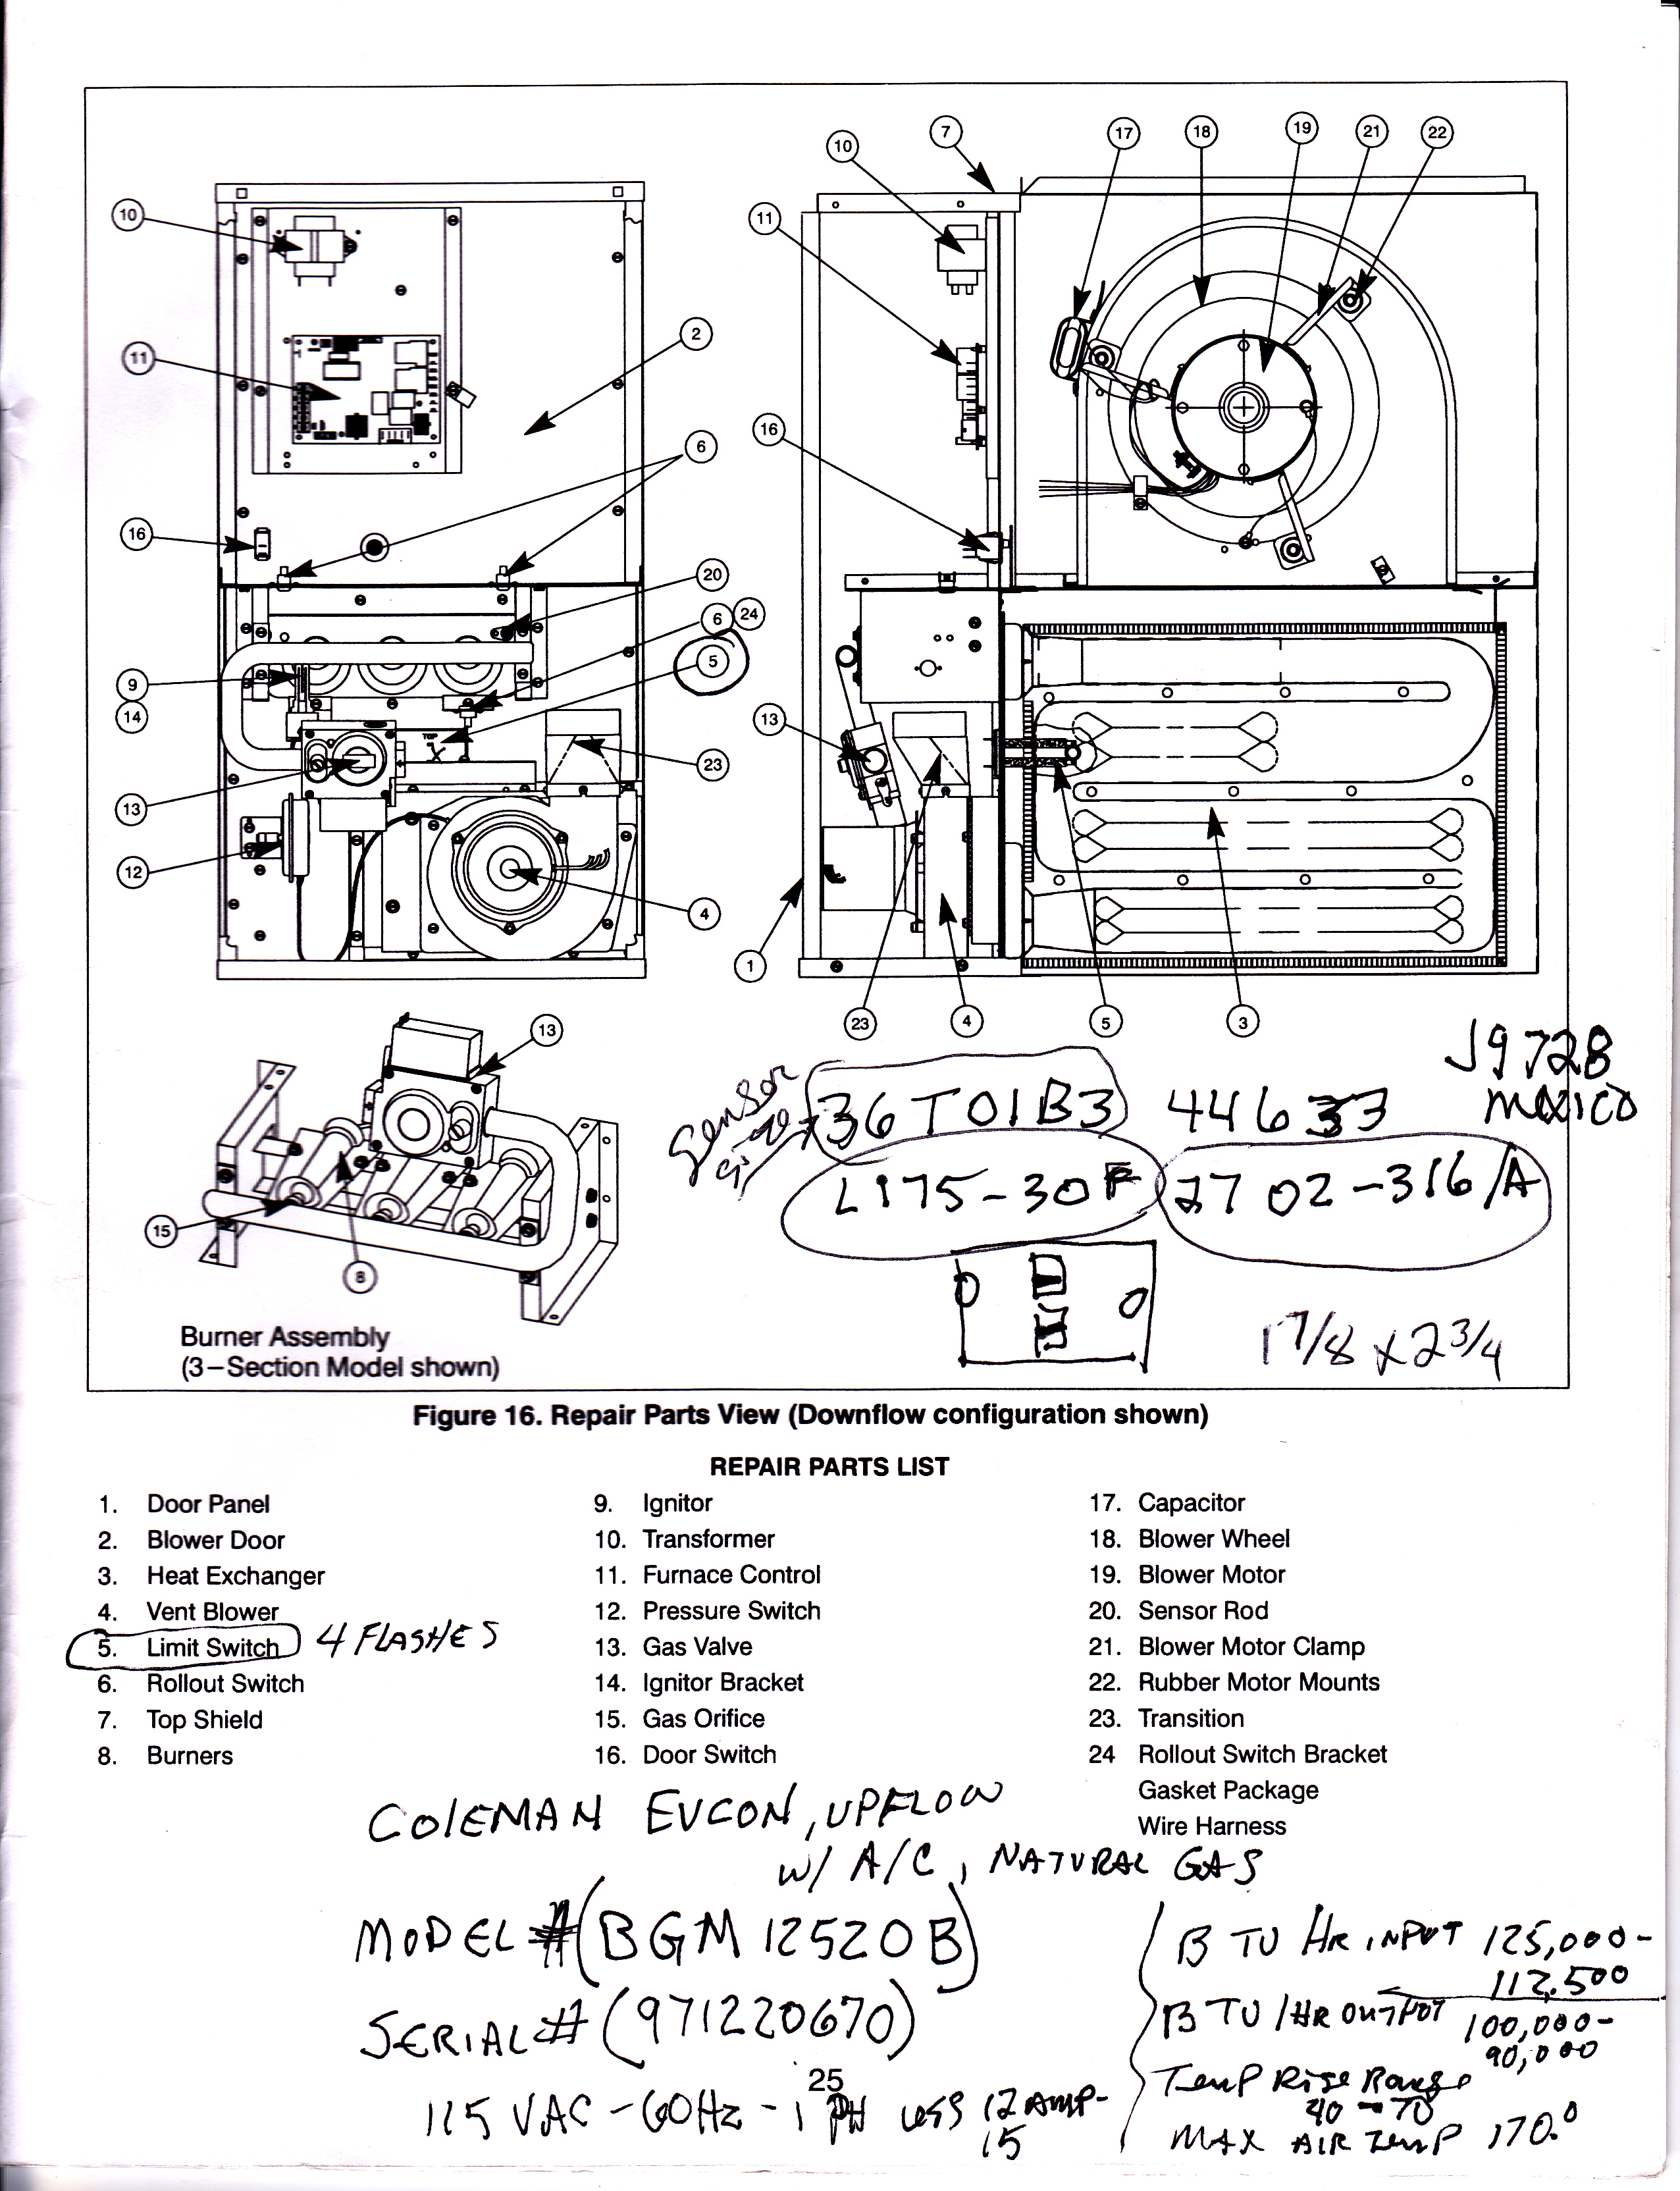 47 Coleman Electric Furnace Wiring Diagram, Coleman Electric Furnace - Coleman Electric Furnace Wiring Diagram